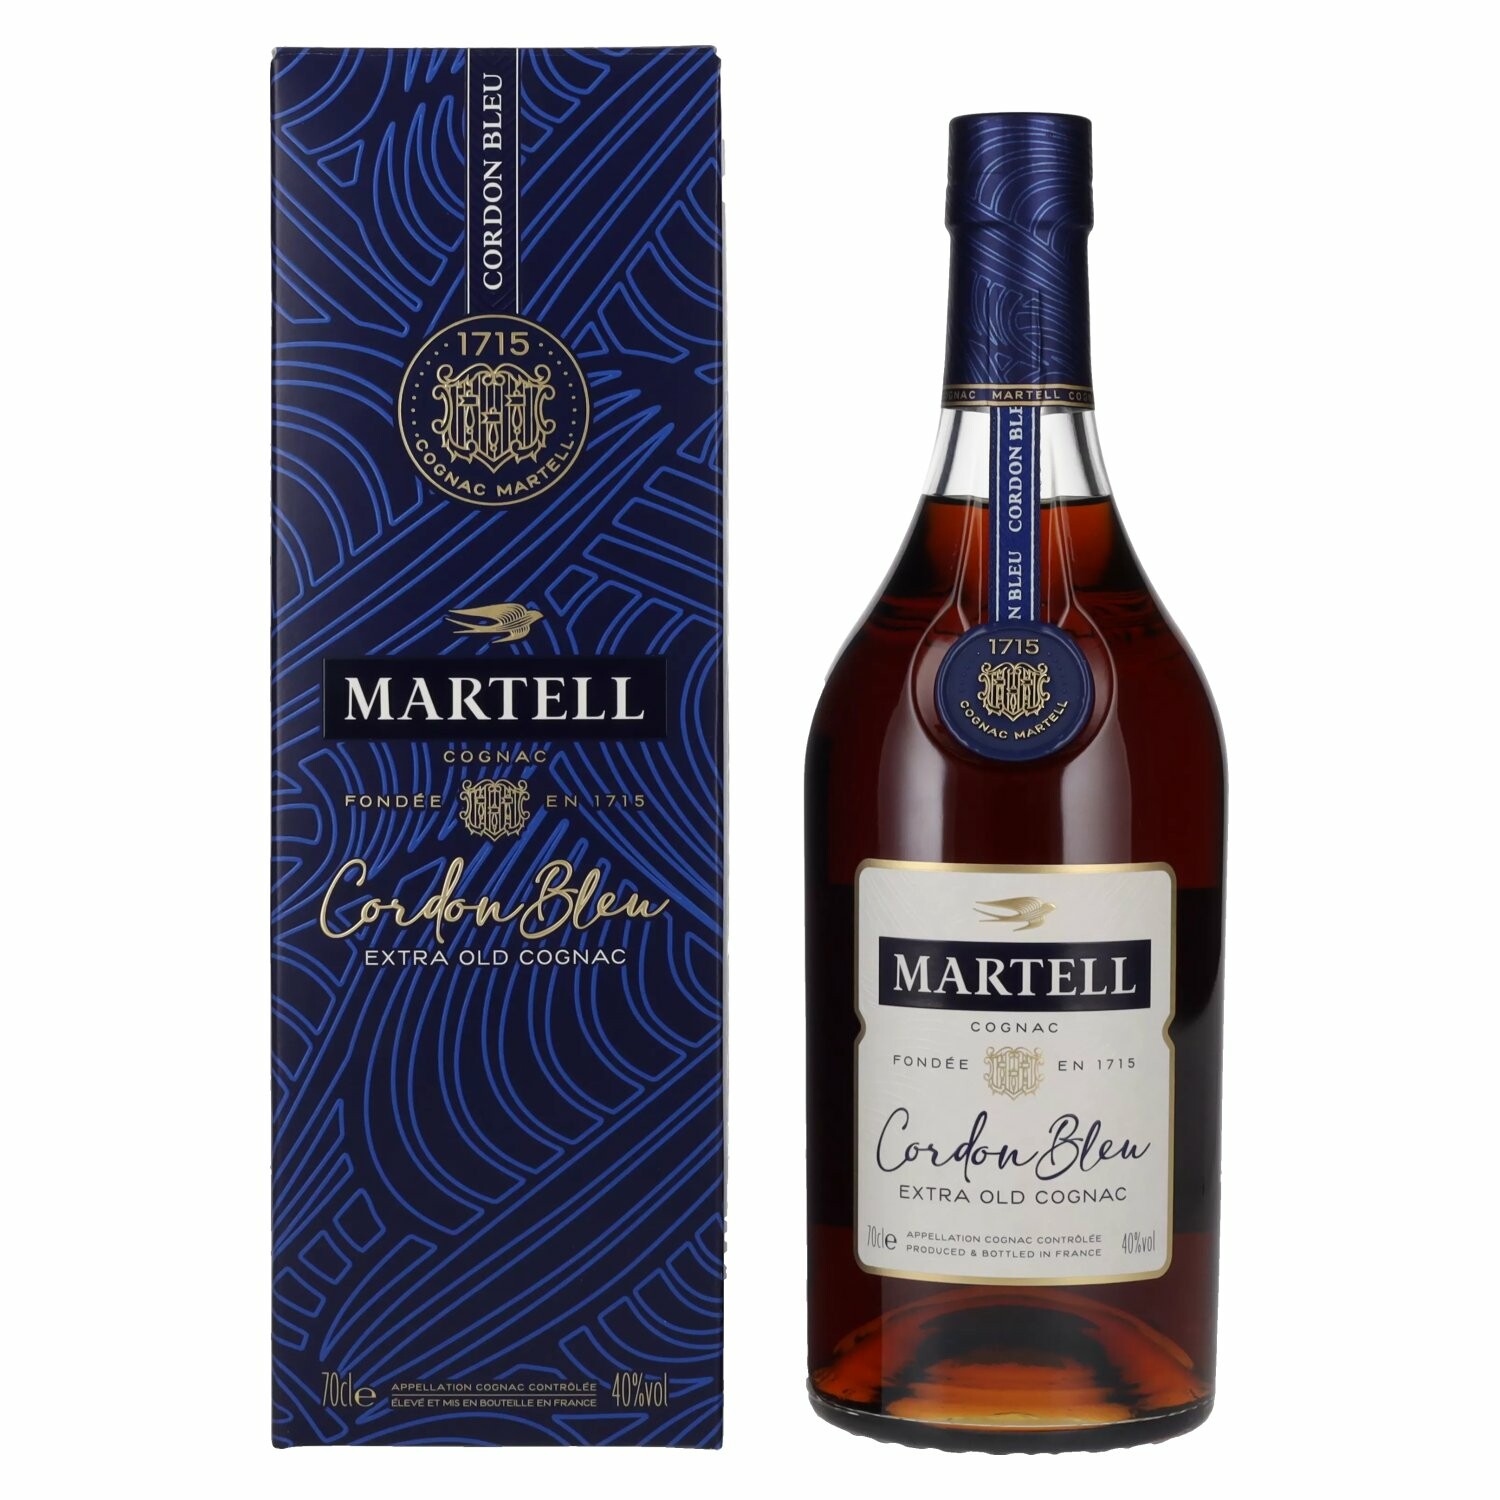 Martell Cognac Cordon Bleu Extra Old Cognac 40% Vol. 0,7l in Giftbox